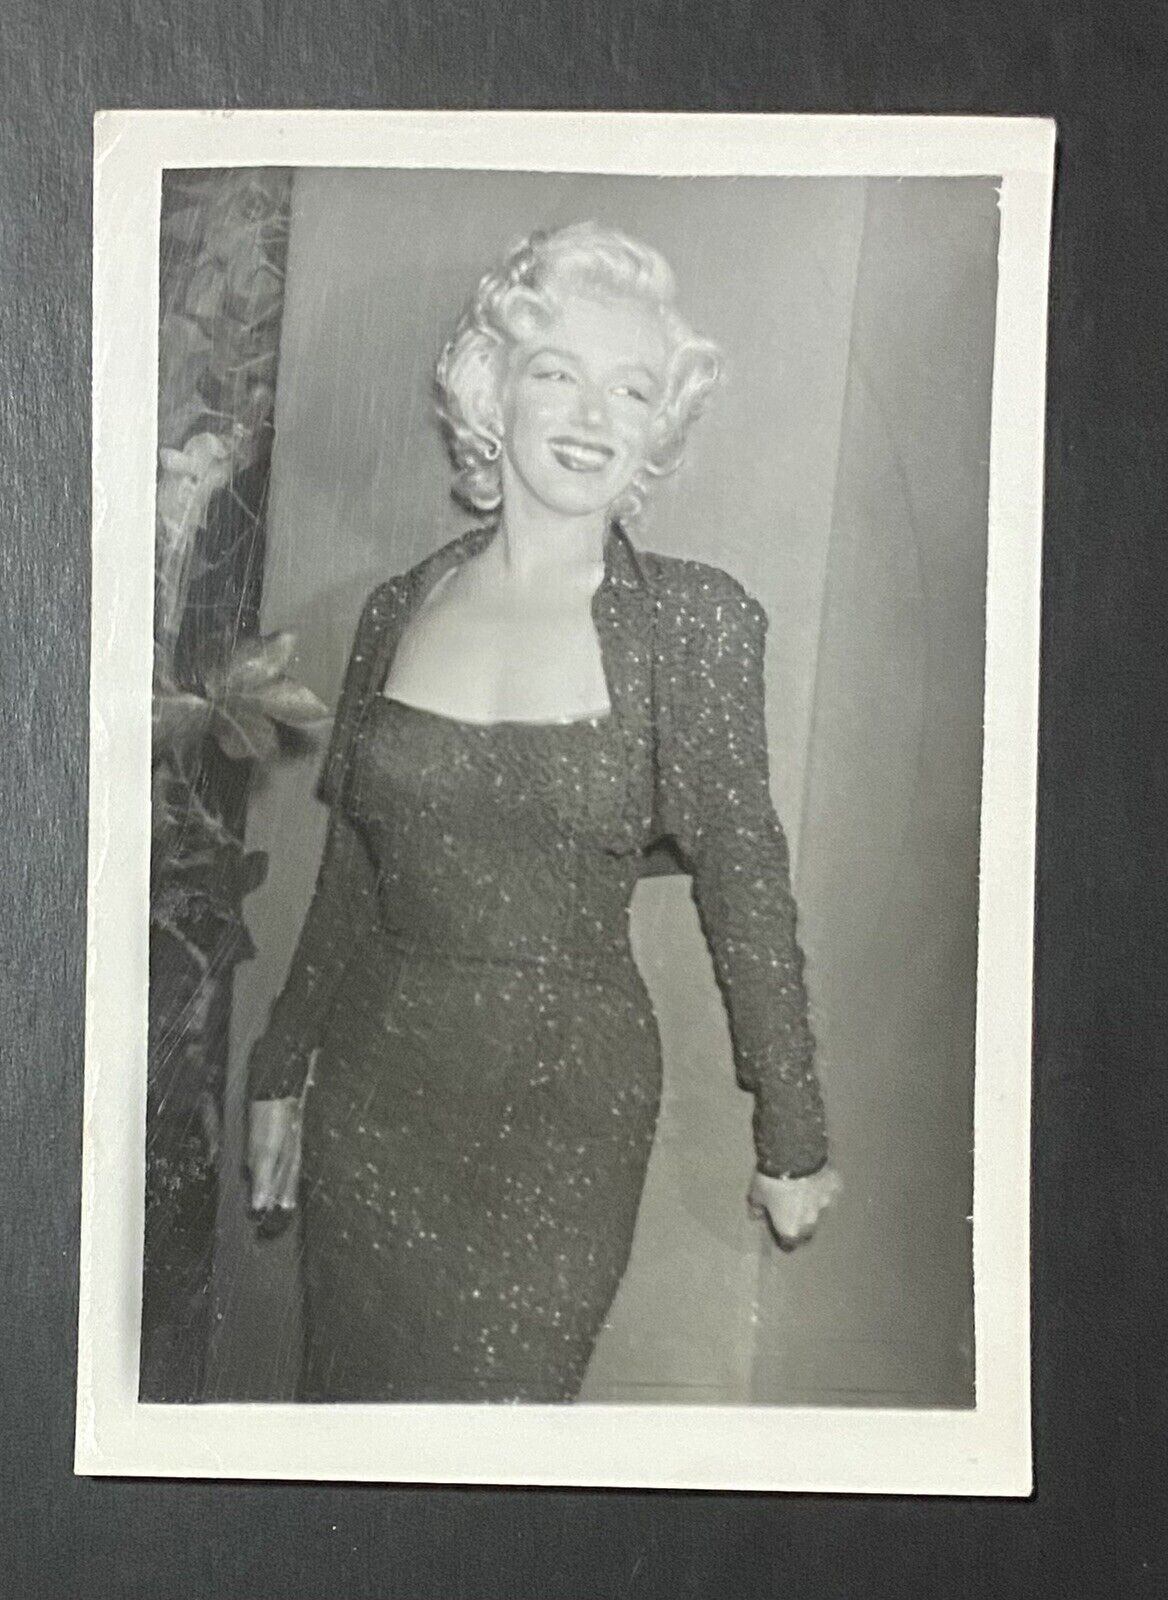 1953 Marilyn Monroe Original Photograph Redbook Awards Best Young Box Office